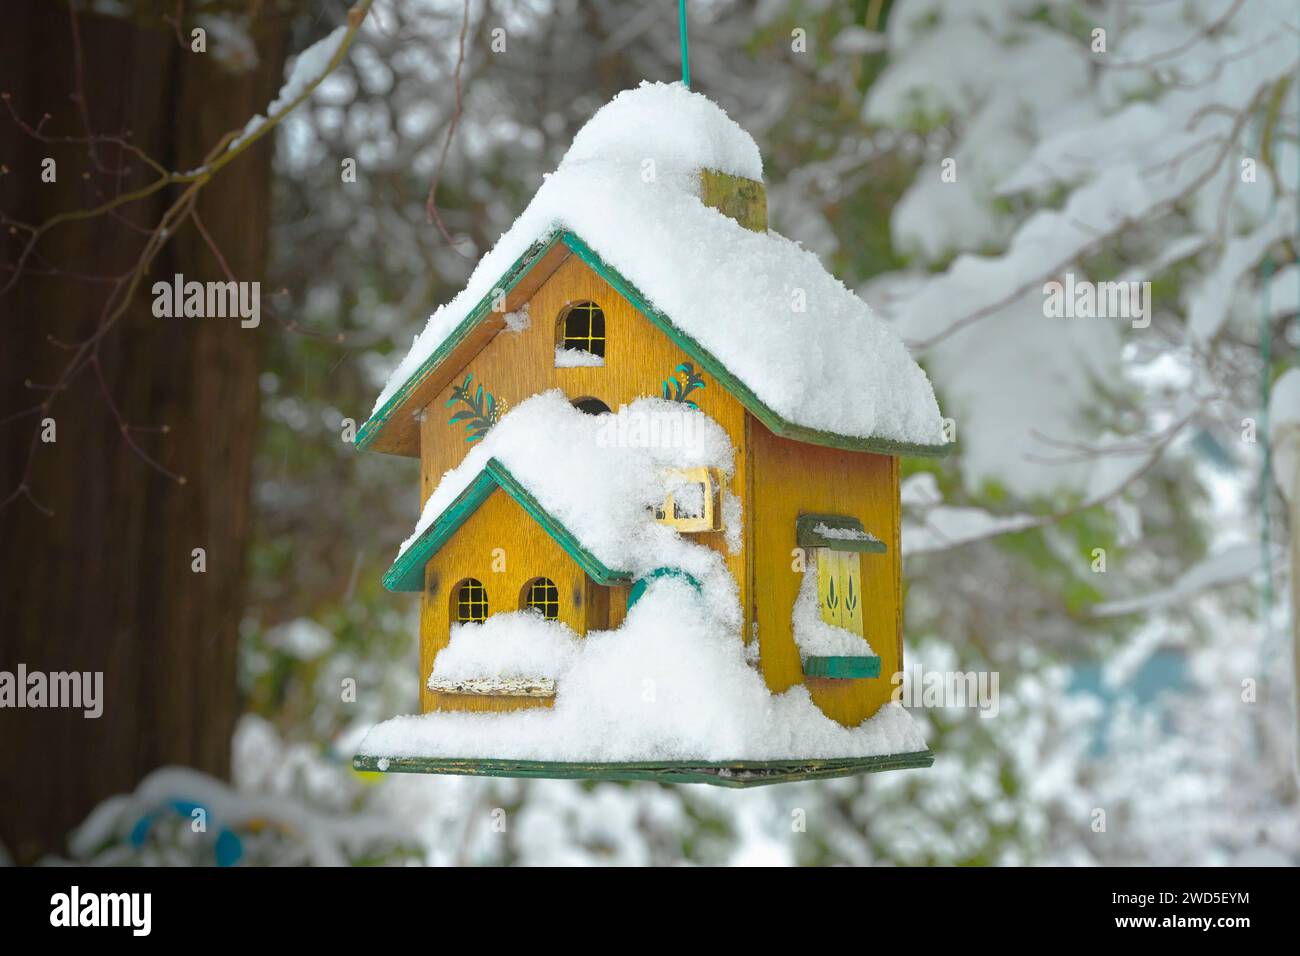 Snow on ornate Birdhouse, winter Stock Photo